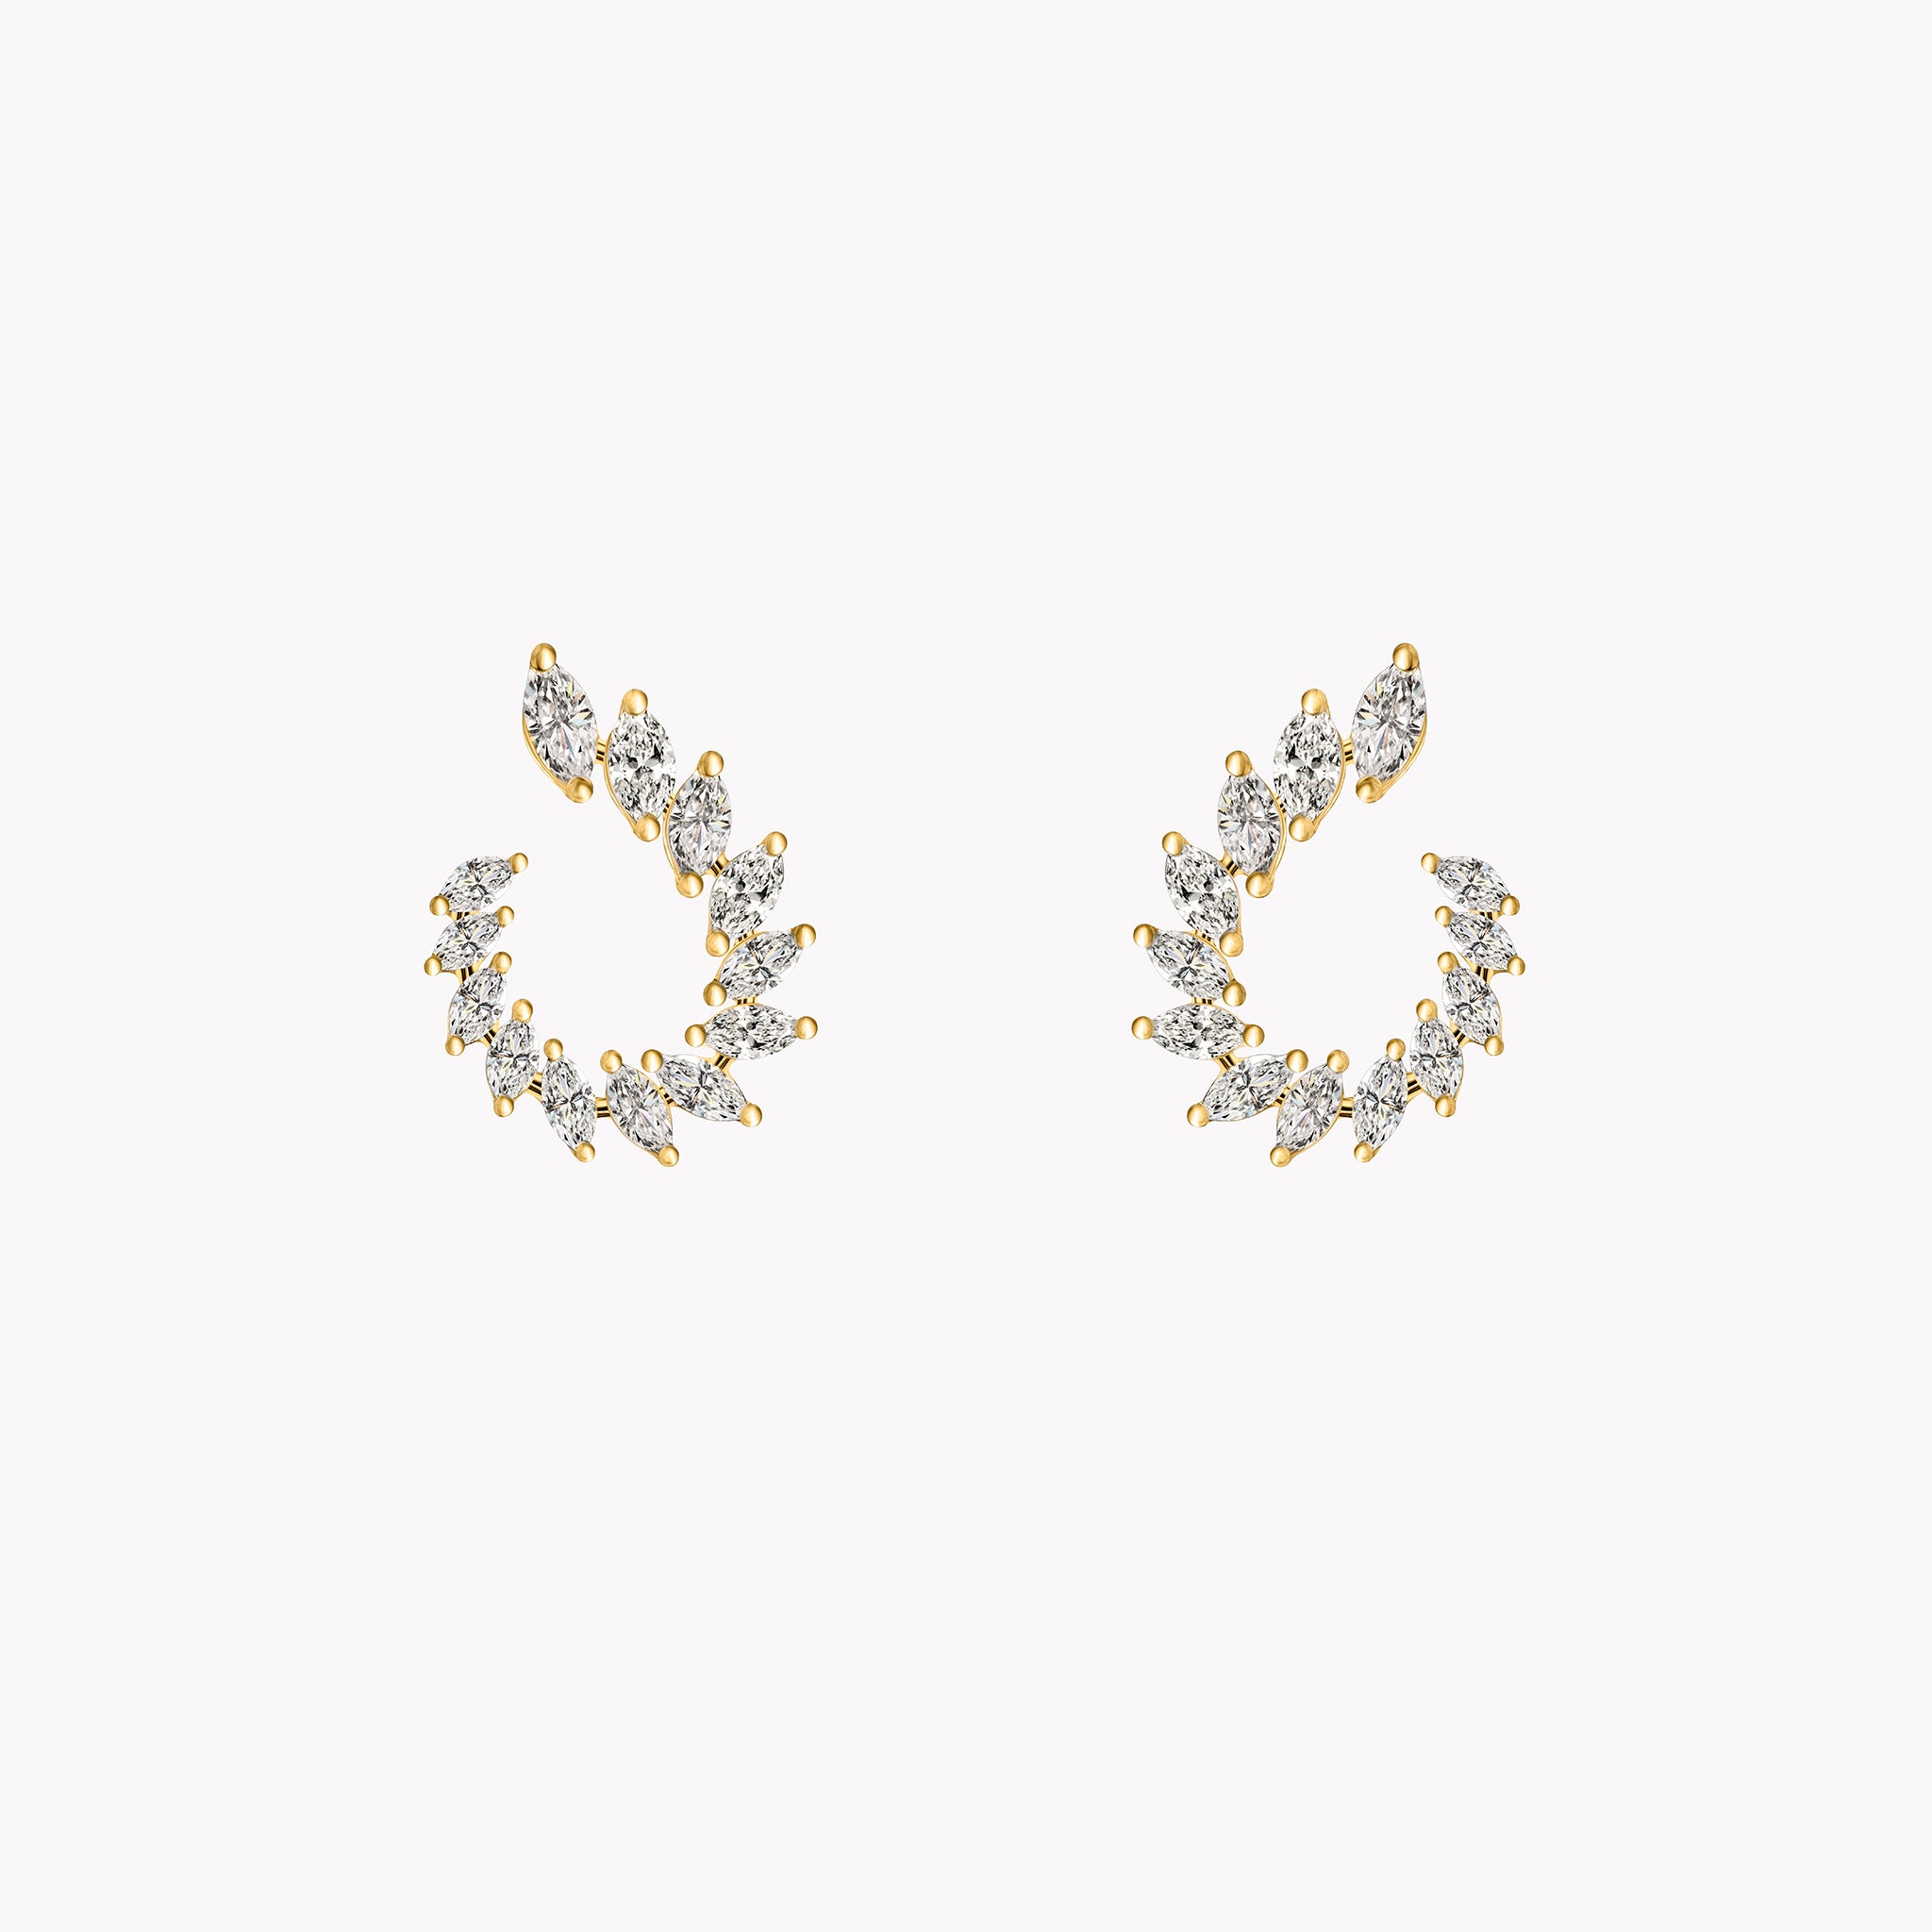 Graduated Marquise Diamond Earrings